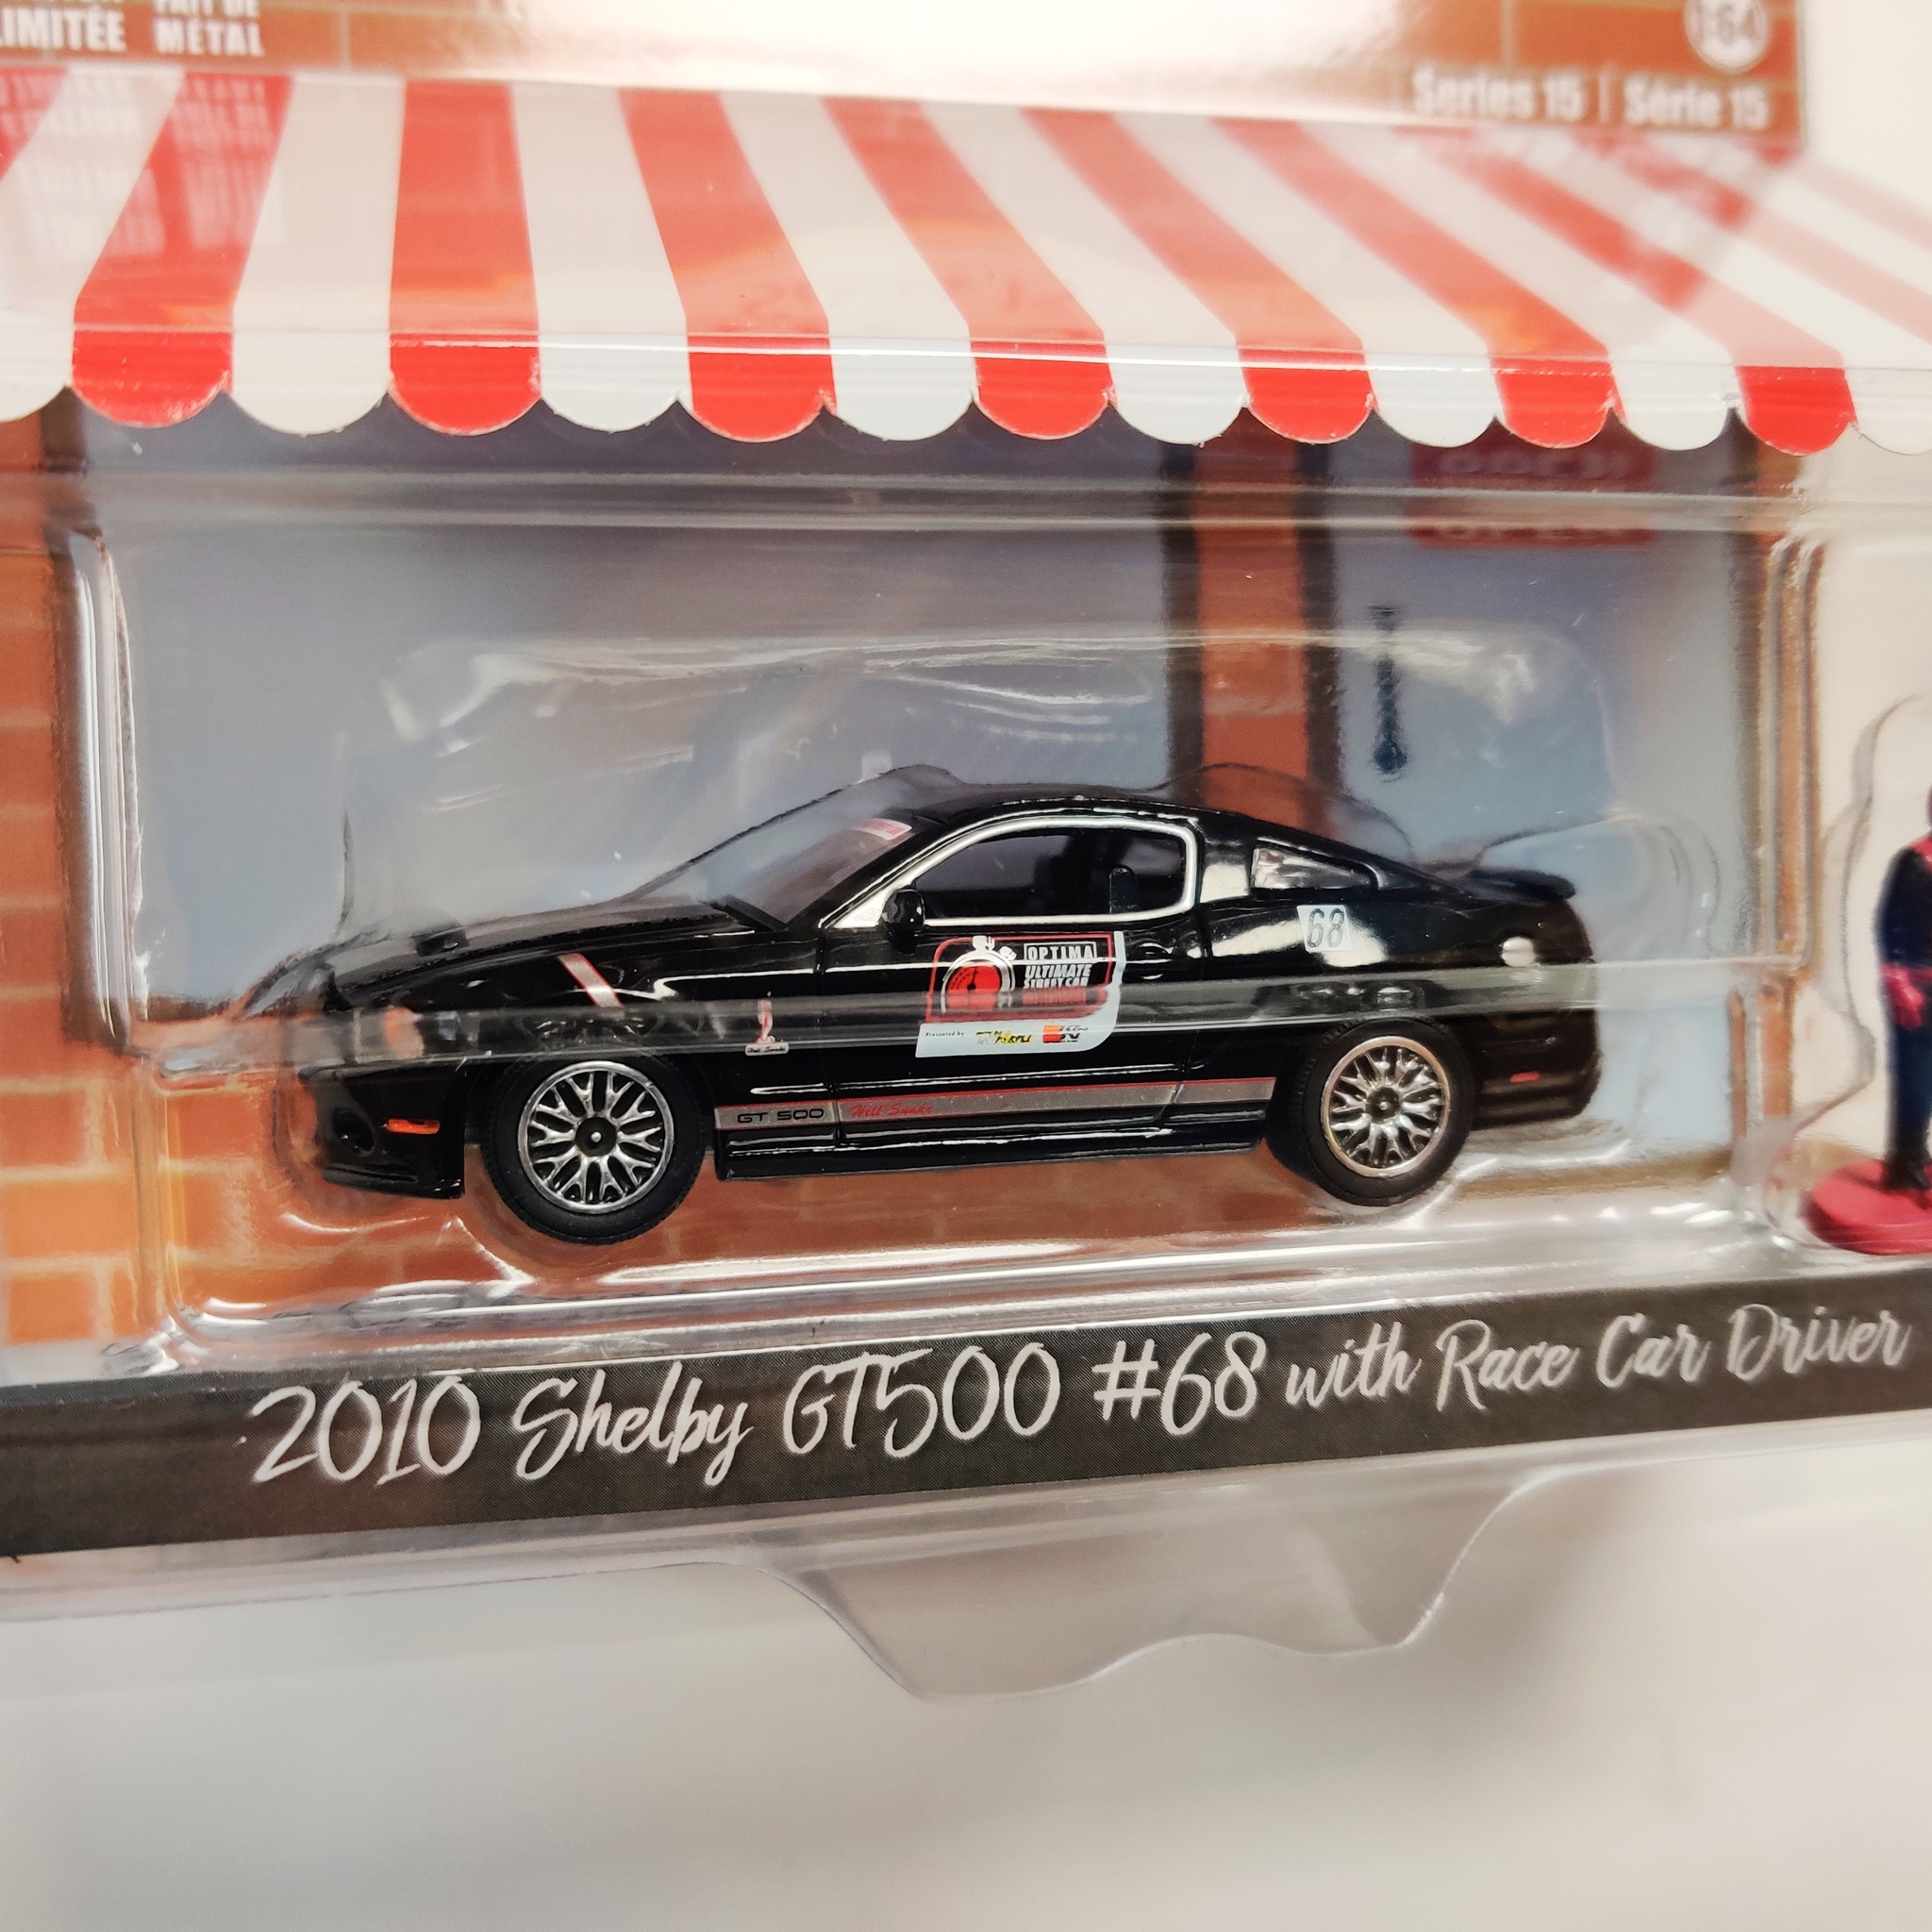 Skala 1/64 Greenlight "The Hobby Shop" 2010 Shelby GT500 #68 w Racer car driver